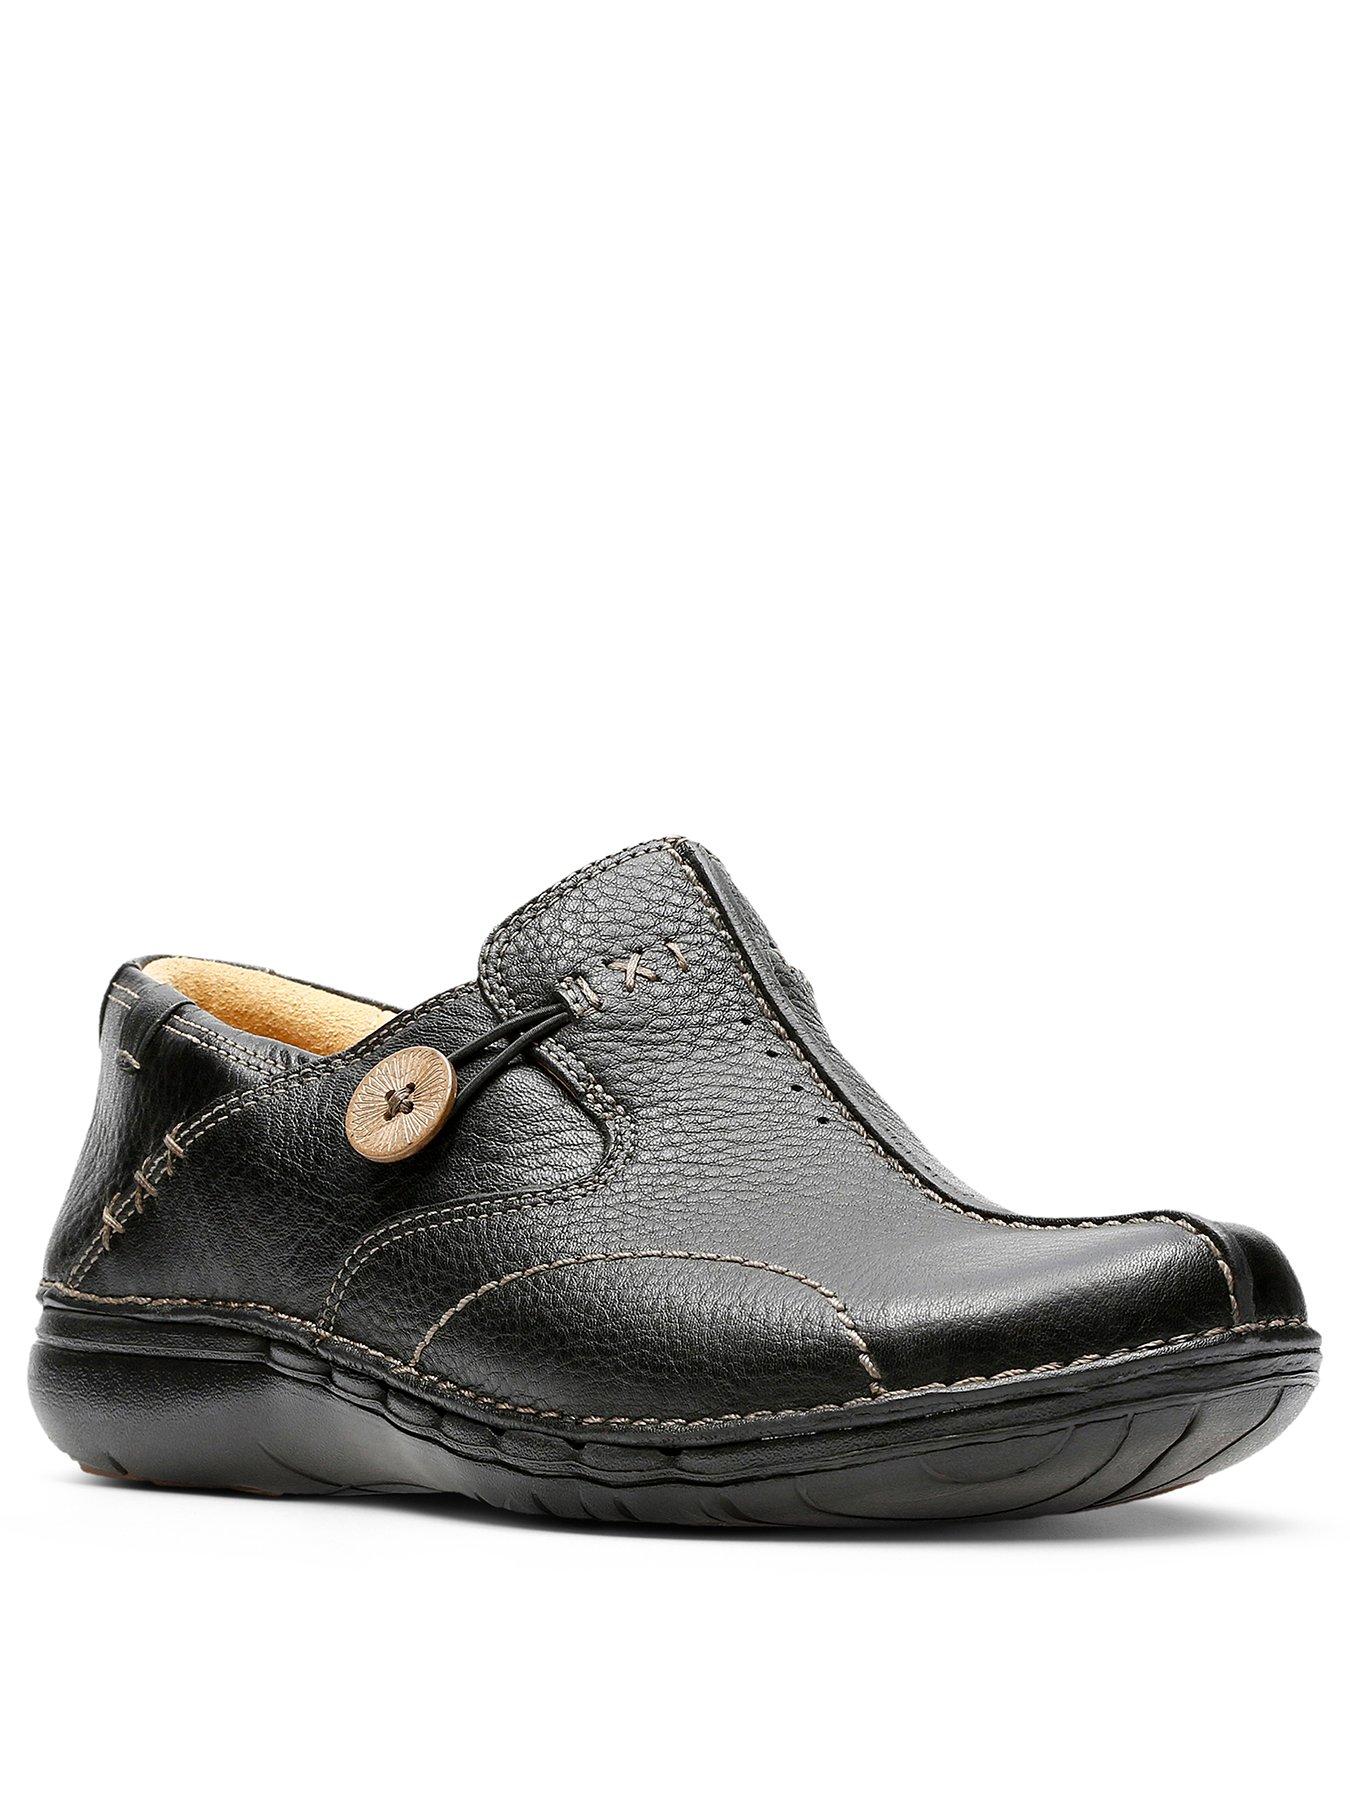 clarks un loop black leather flat slip on shoes